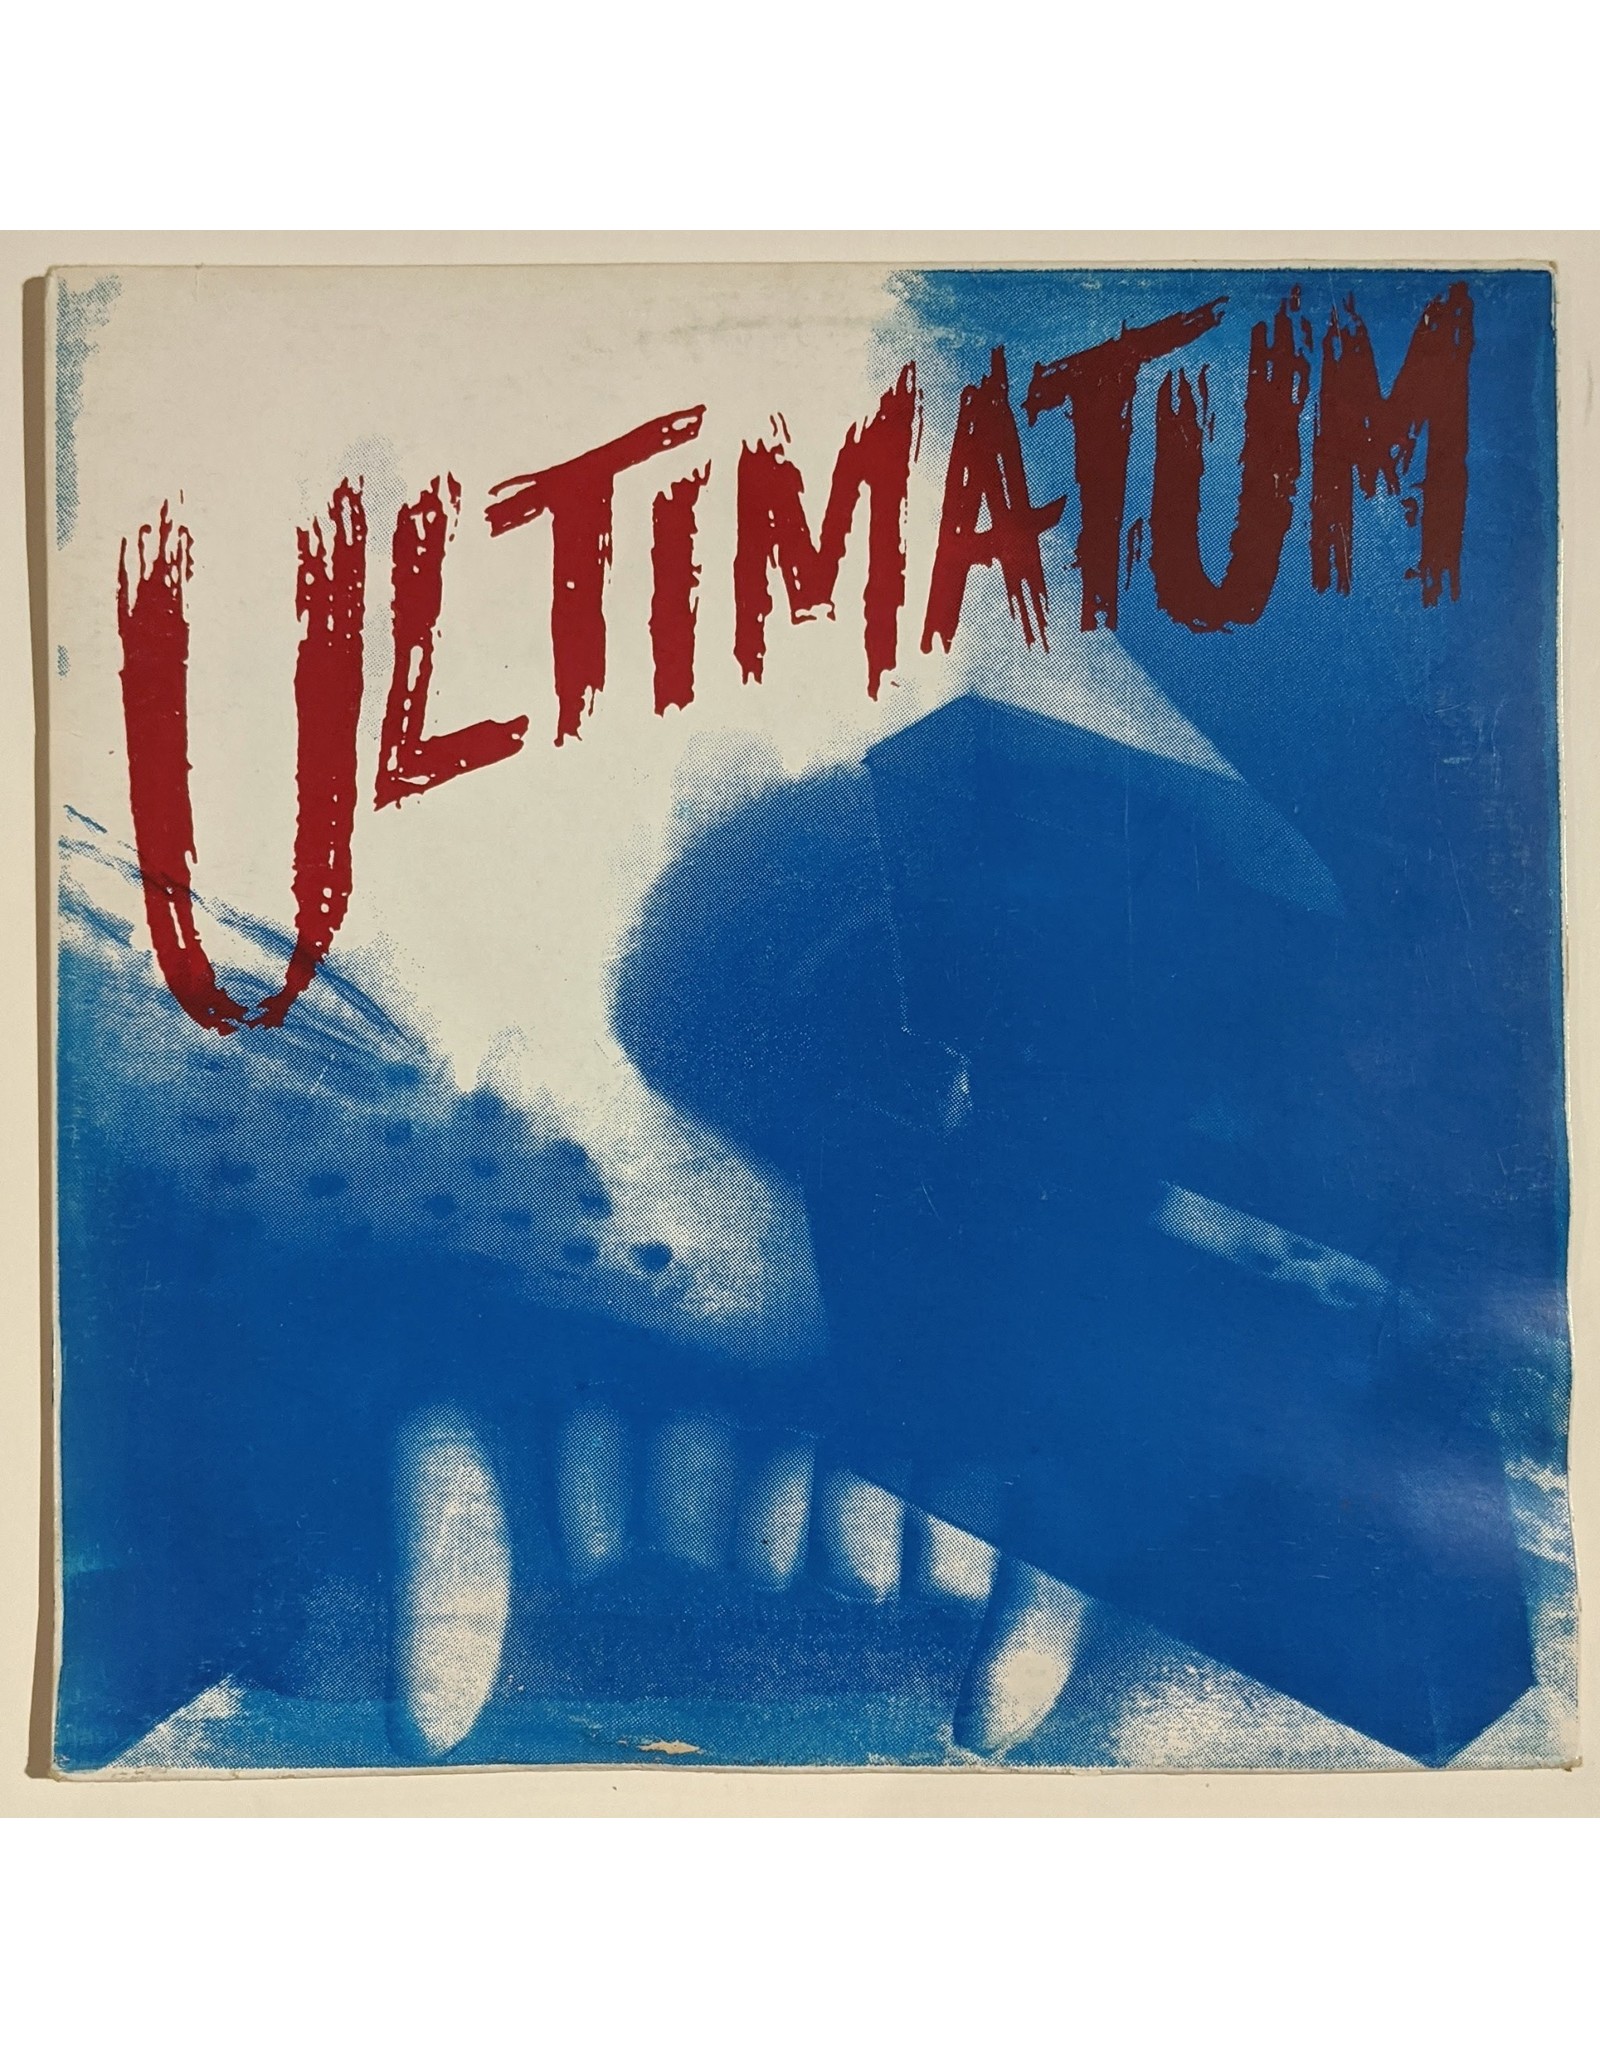 USED: Various: Ultimatum LP